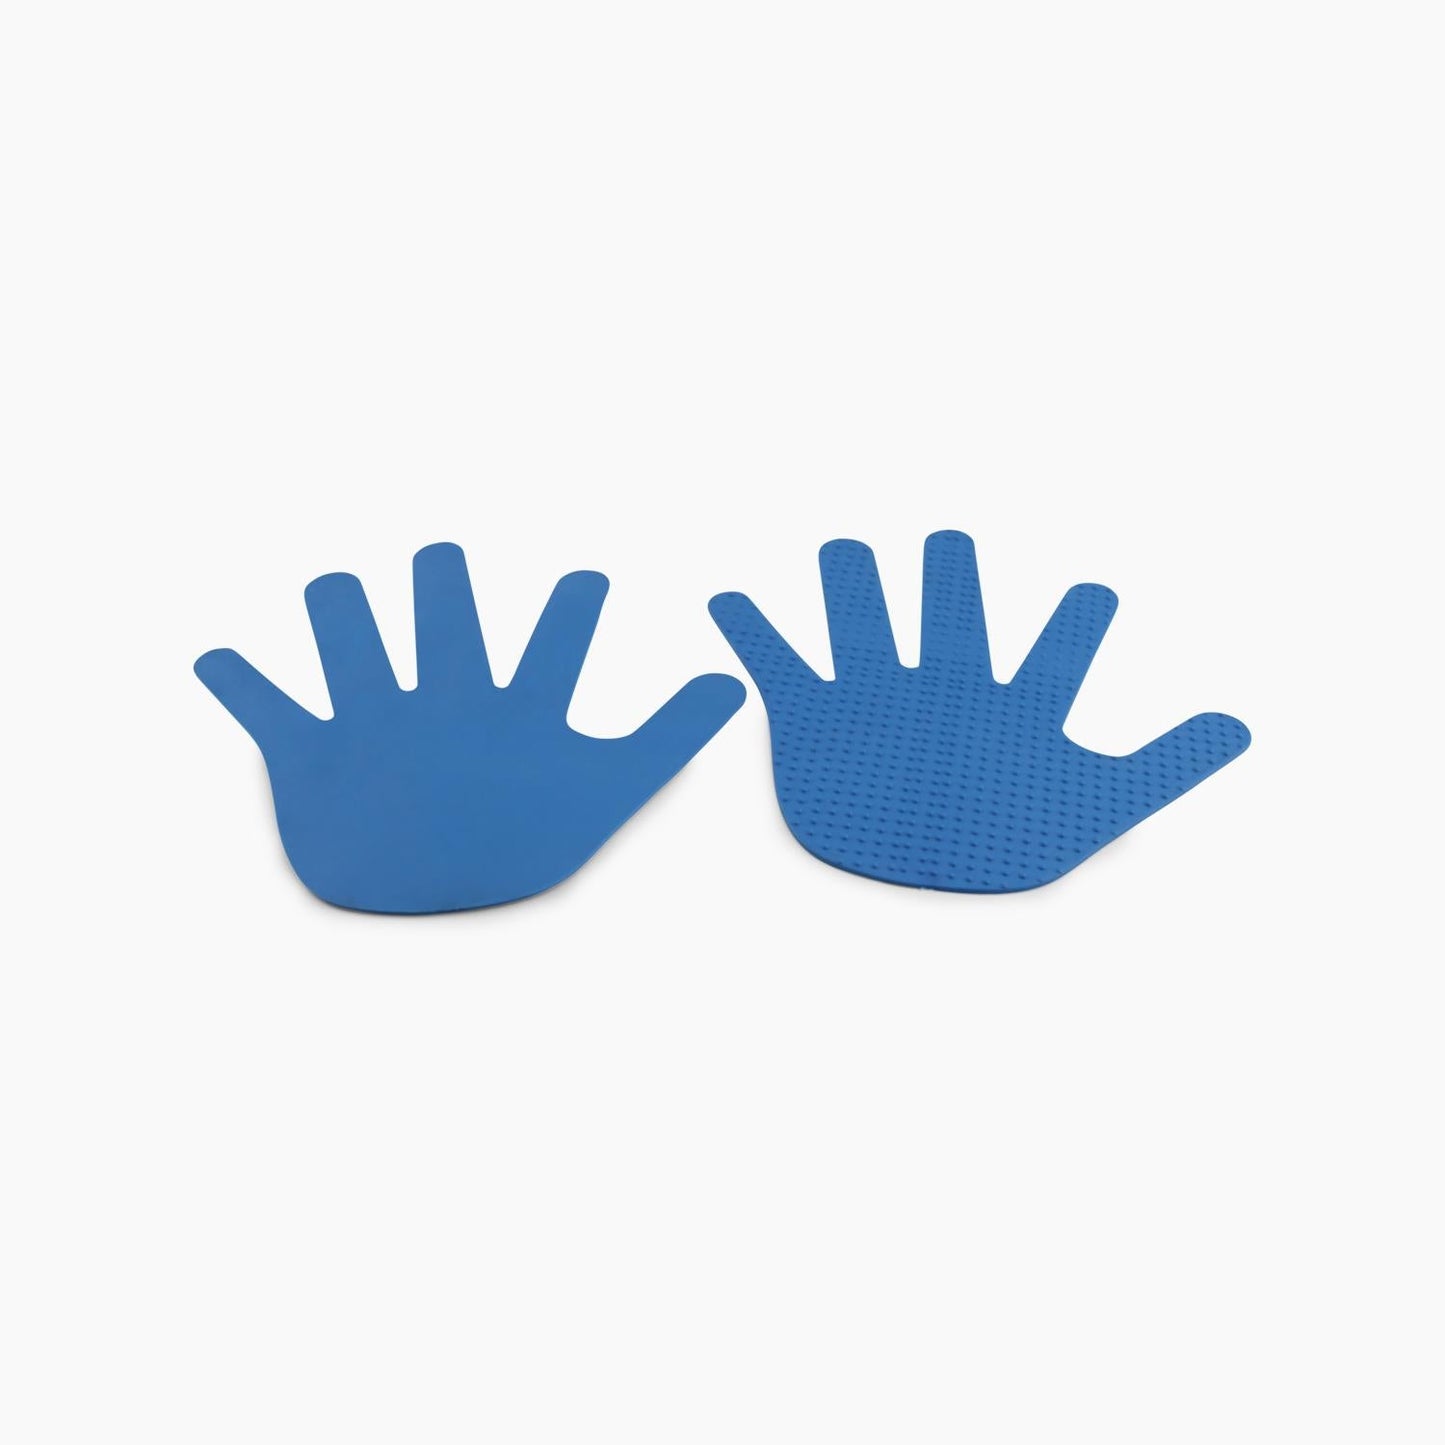 Buy Pair Of Rubber Hands-Splay (UK) Limited-Blue-Splay UK Online